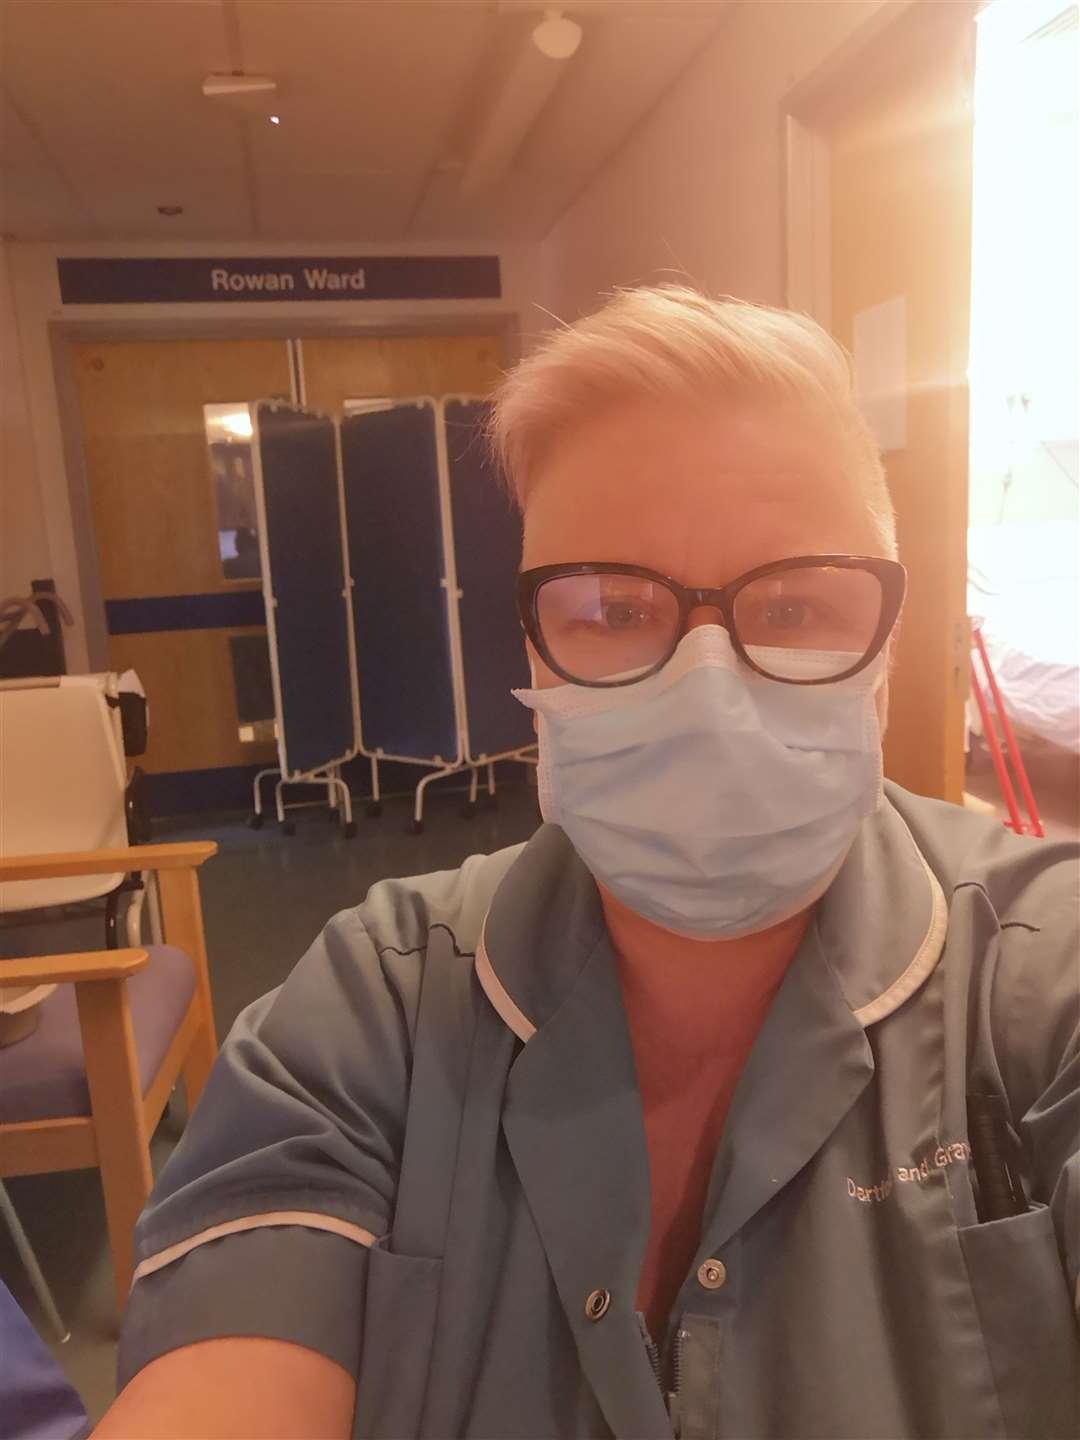 Teresa Knapp, a 44-year-old nurse assistant at Darent Valley Hospital